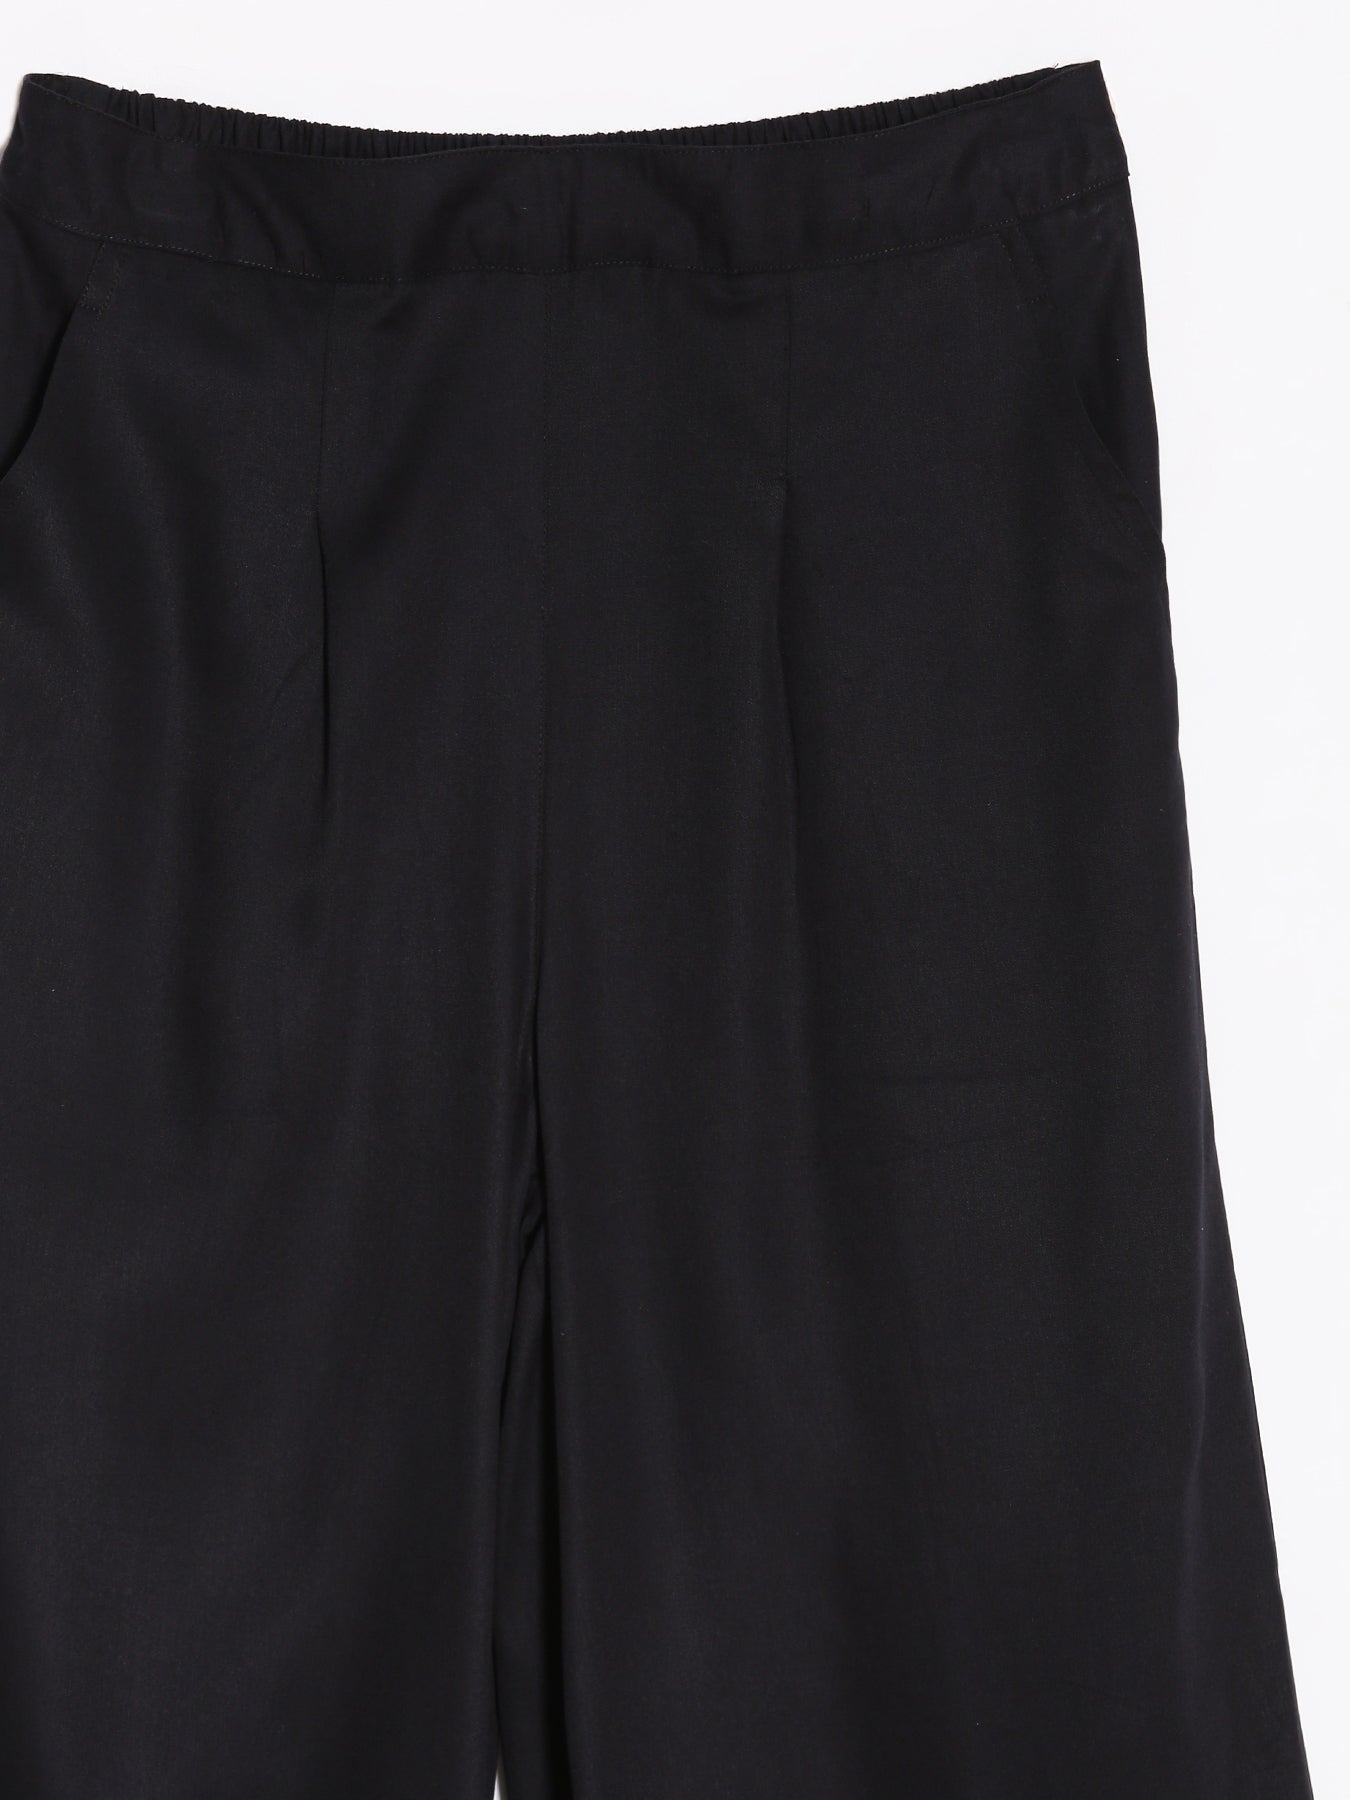 Black Palazzo Pants For Women | Shop online from सादा /SAADAA